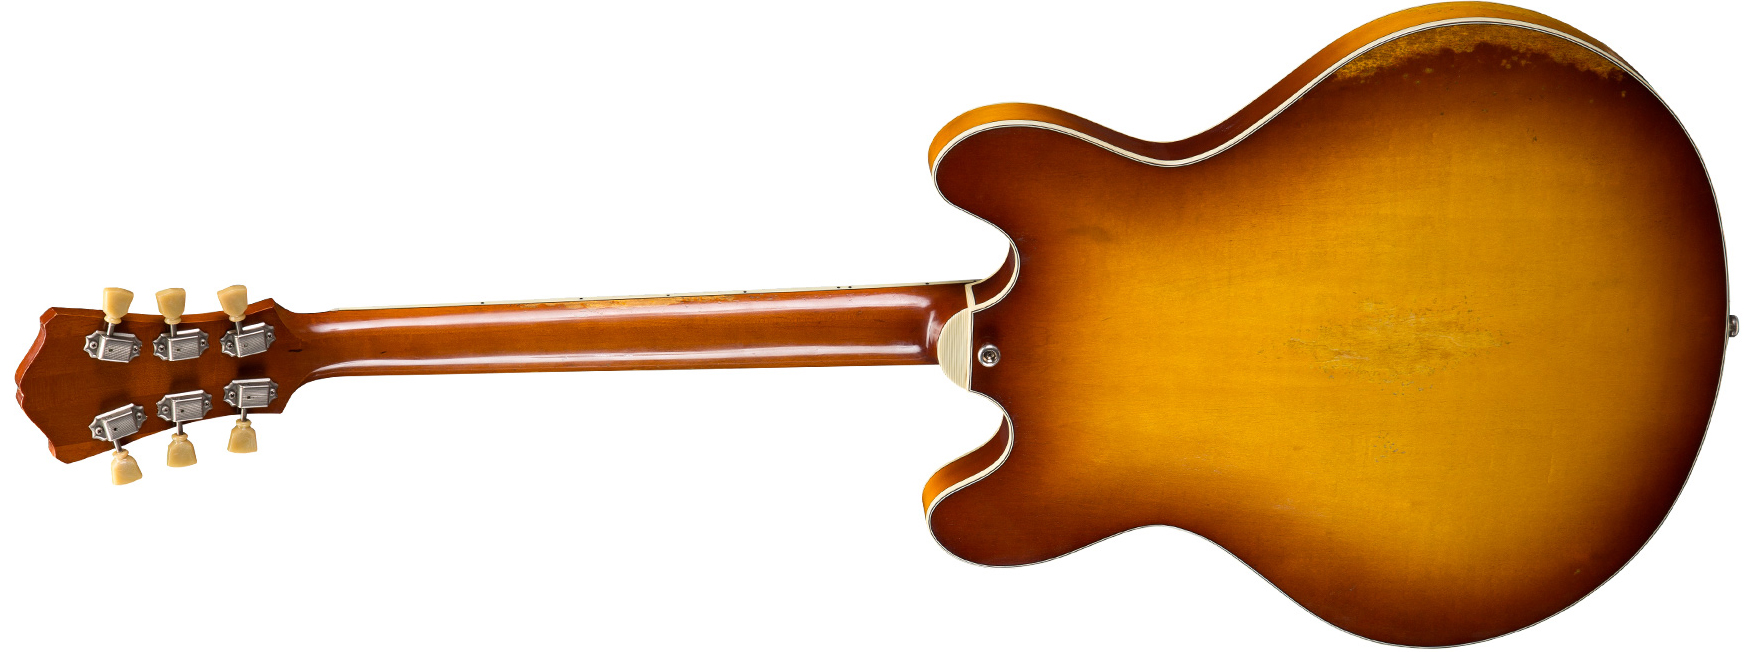 Eastman T64/v Thinline Laminate Tout Erable 2p90 Lollar Ht Eb - Antique Gold Burst - Semi-Hollow E-Gitarre - Variation 2